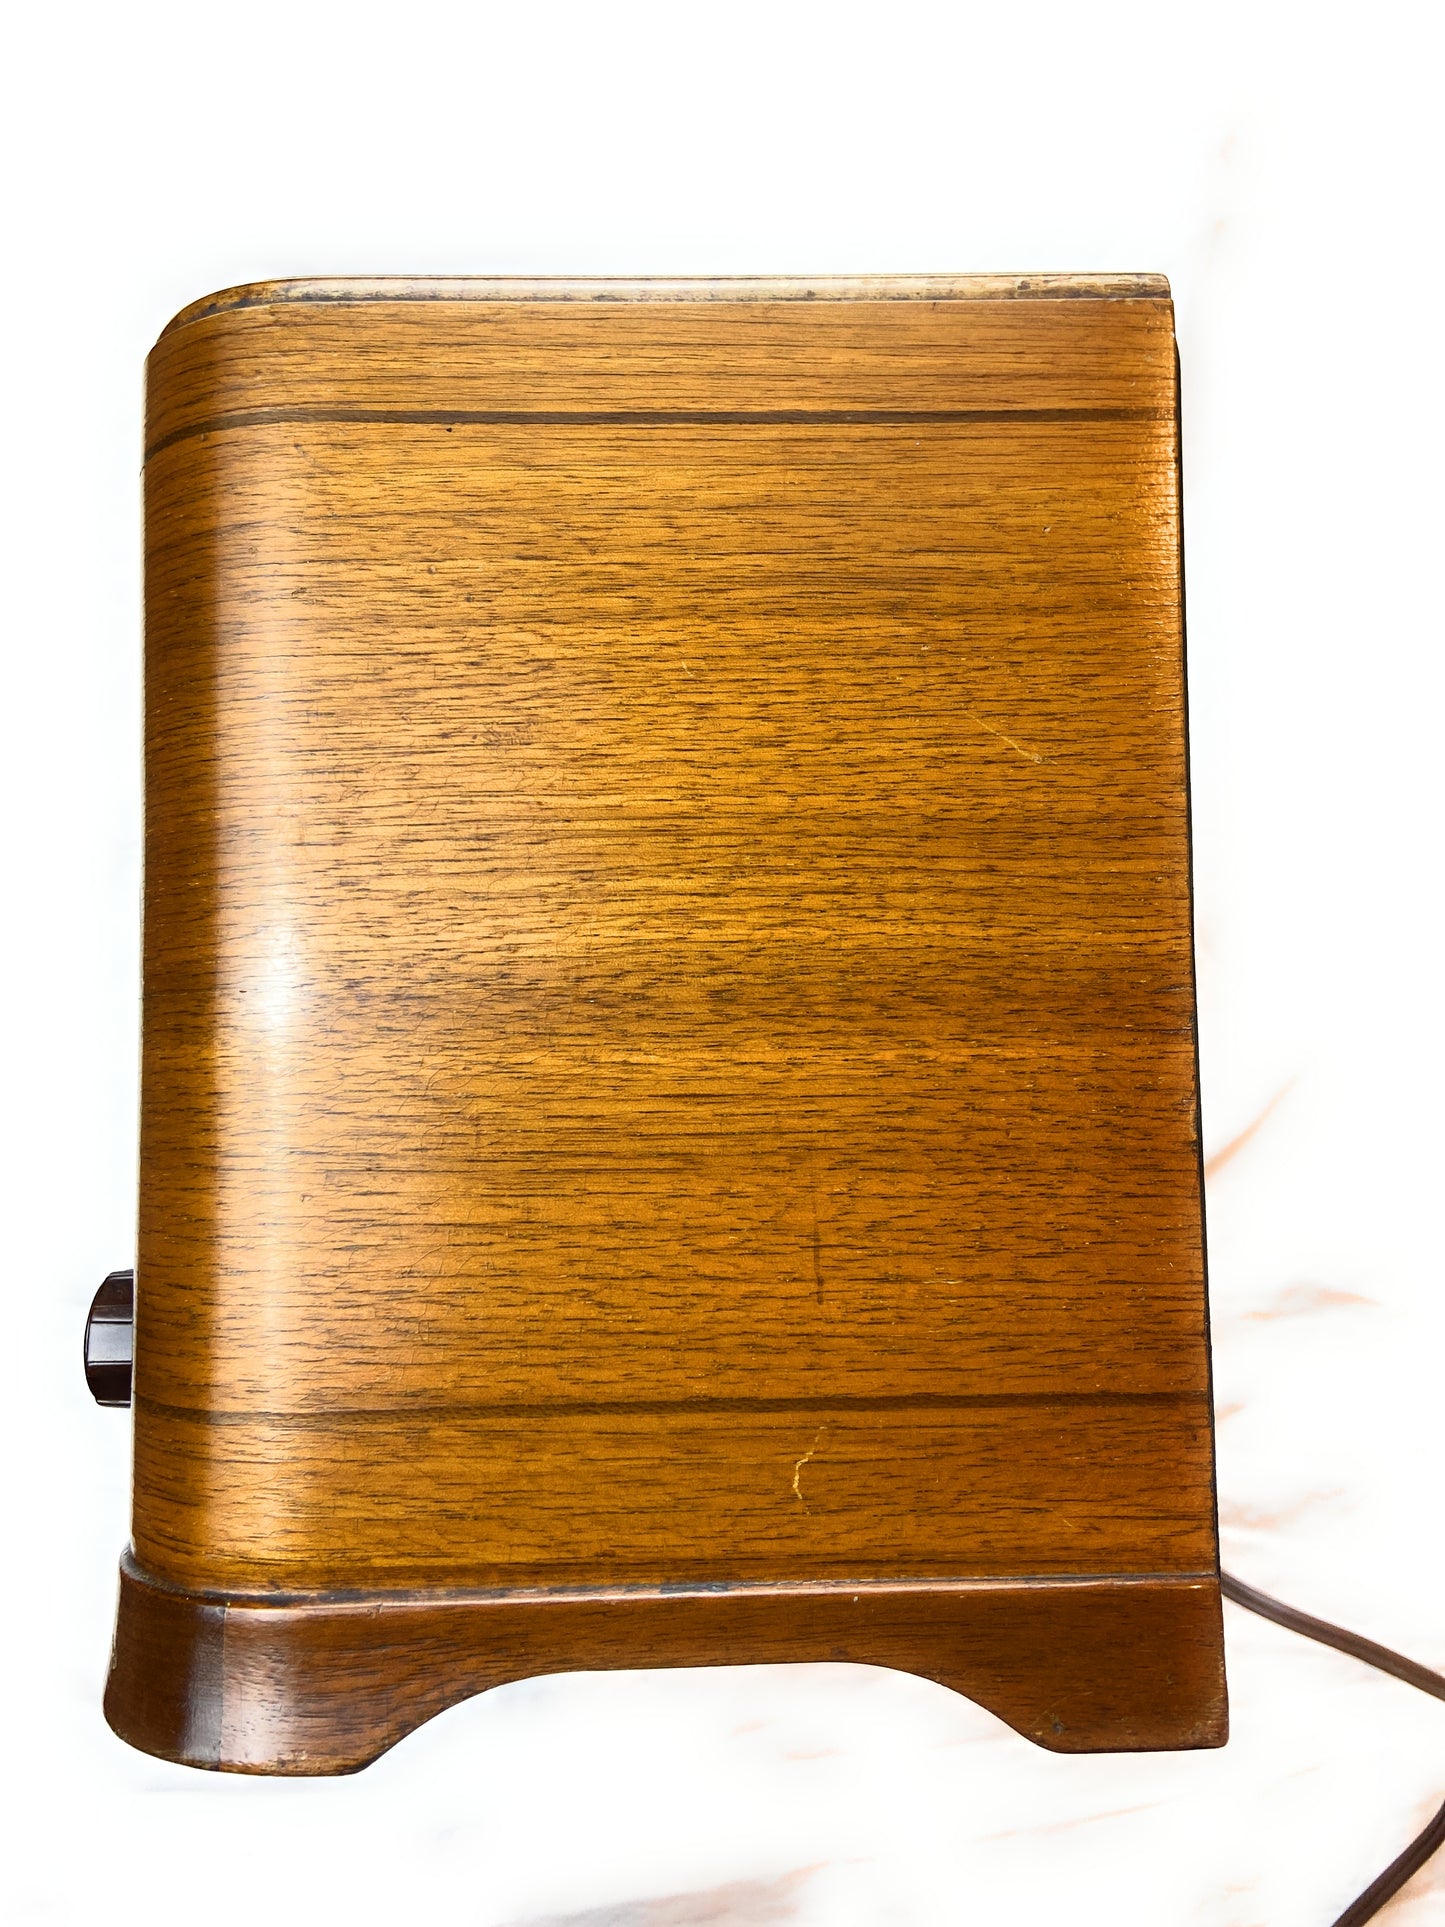 Vintage Radio Wooden Case Model 56tc Am/sw 